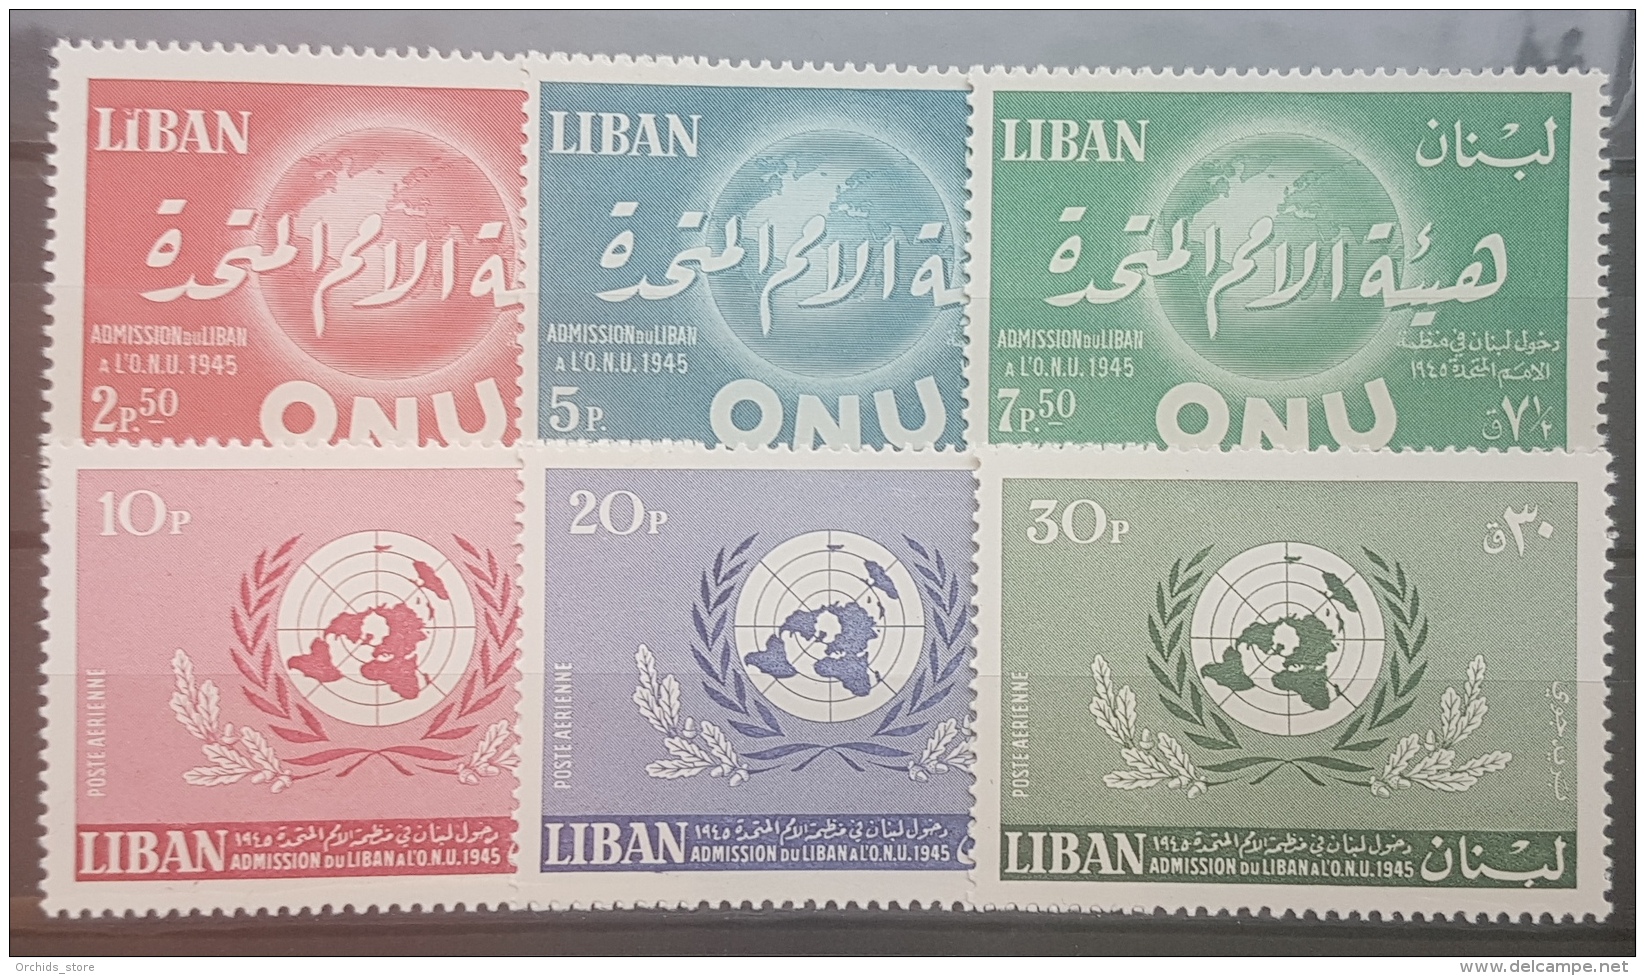 E1124Grp - Lebanon 1967 SG 986-991 Complete Set 6v. MNH - 22nd Anniv Of Admission To The United Nations UNO - Lebanon